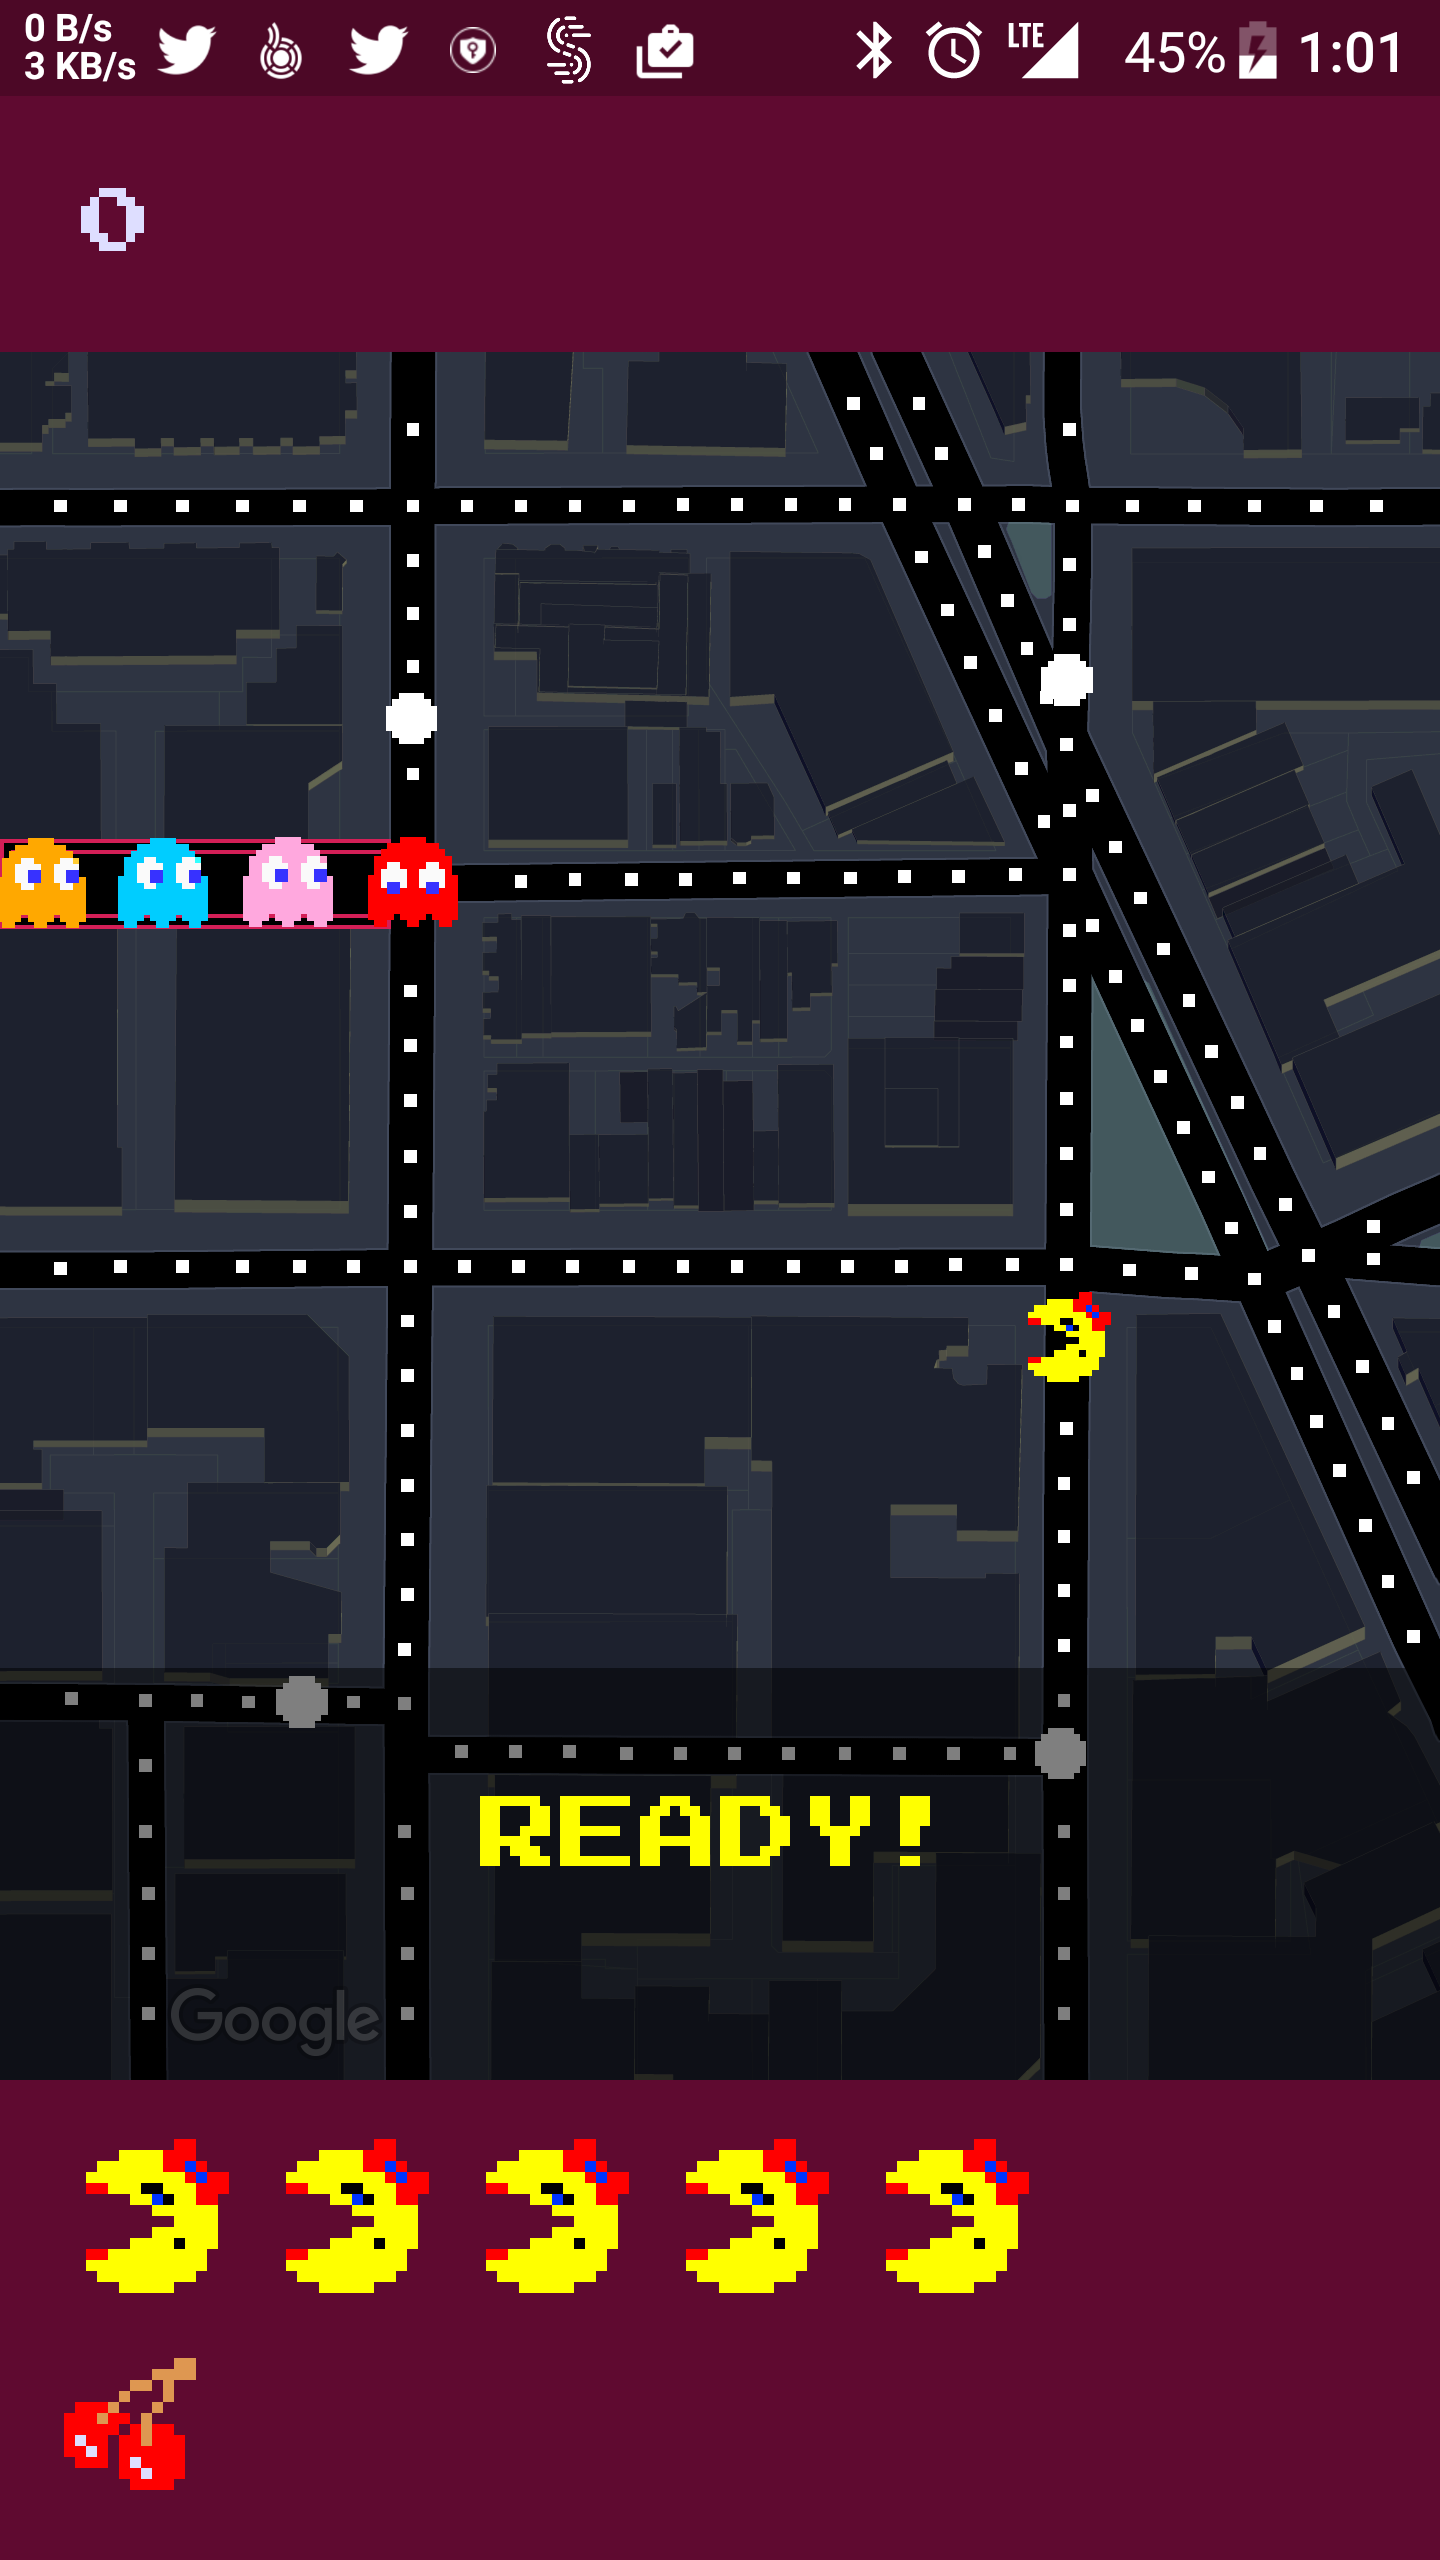 Google Maps Ms. Pac-Man